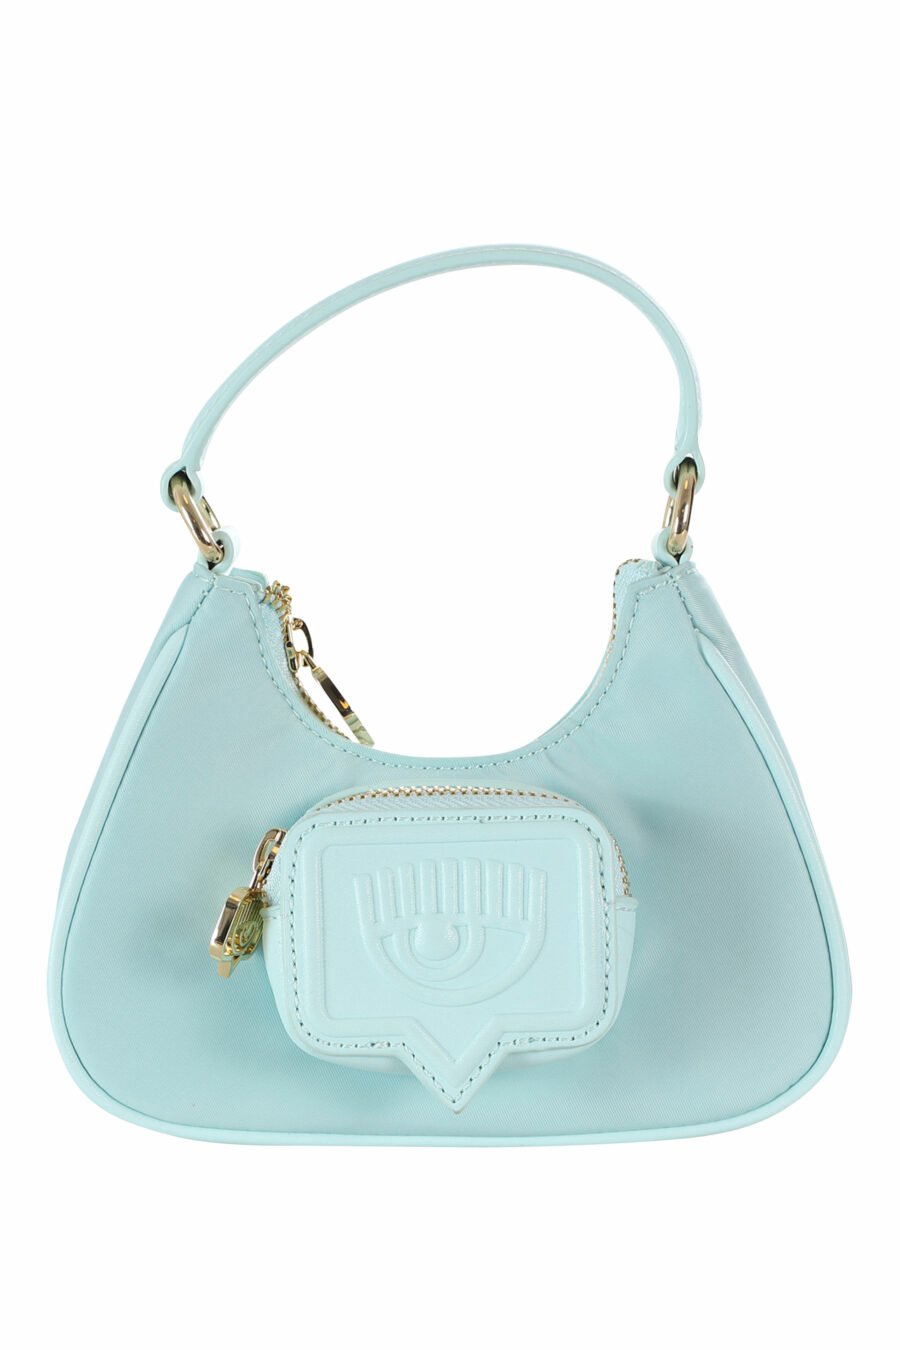 Mini light blue hobo style shoulder bag with pocket and monochrome logo - 8052672352095